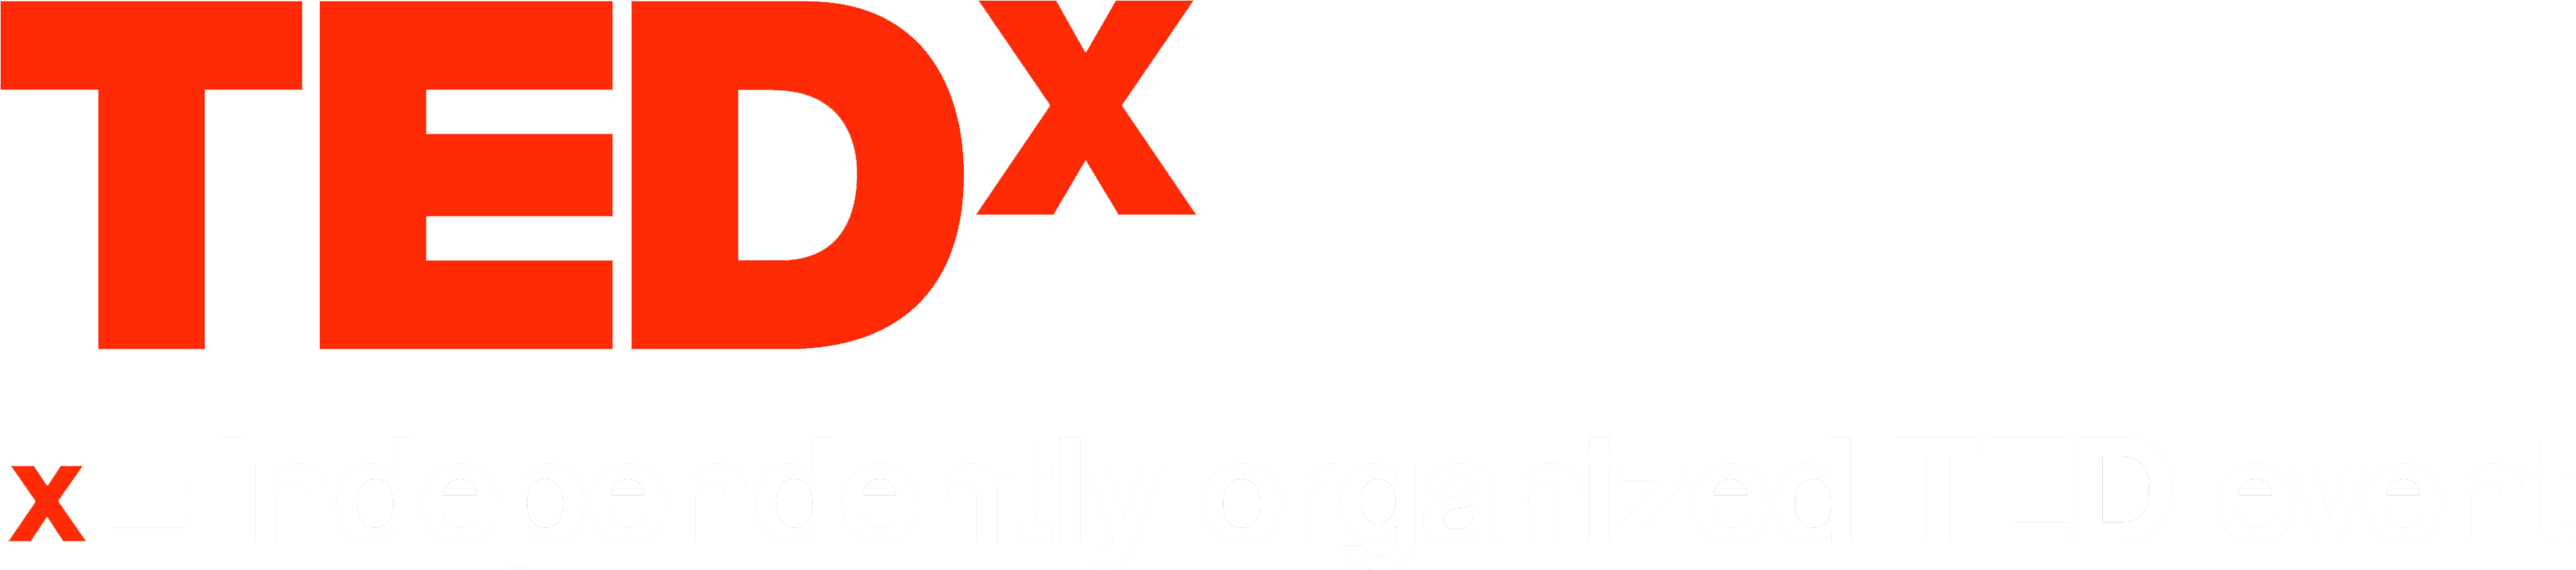 tedxsitia-logo-light